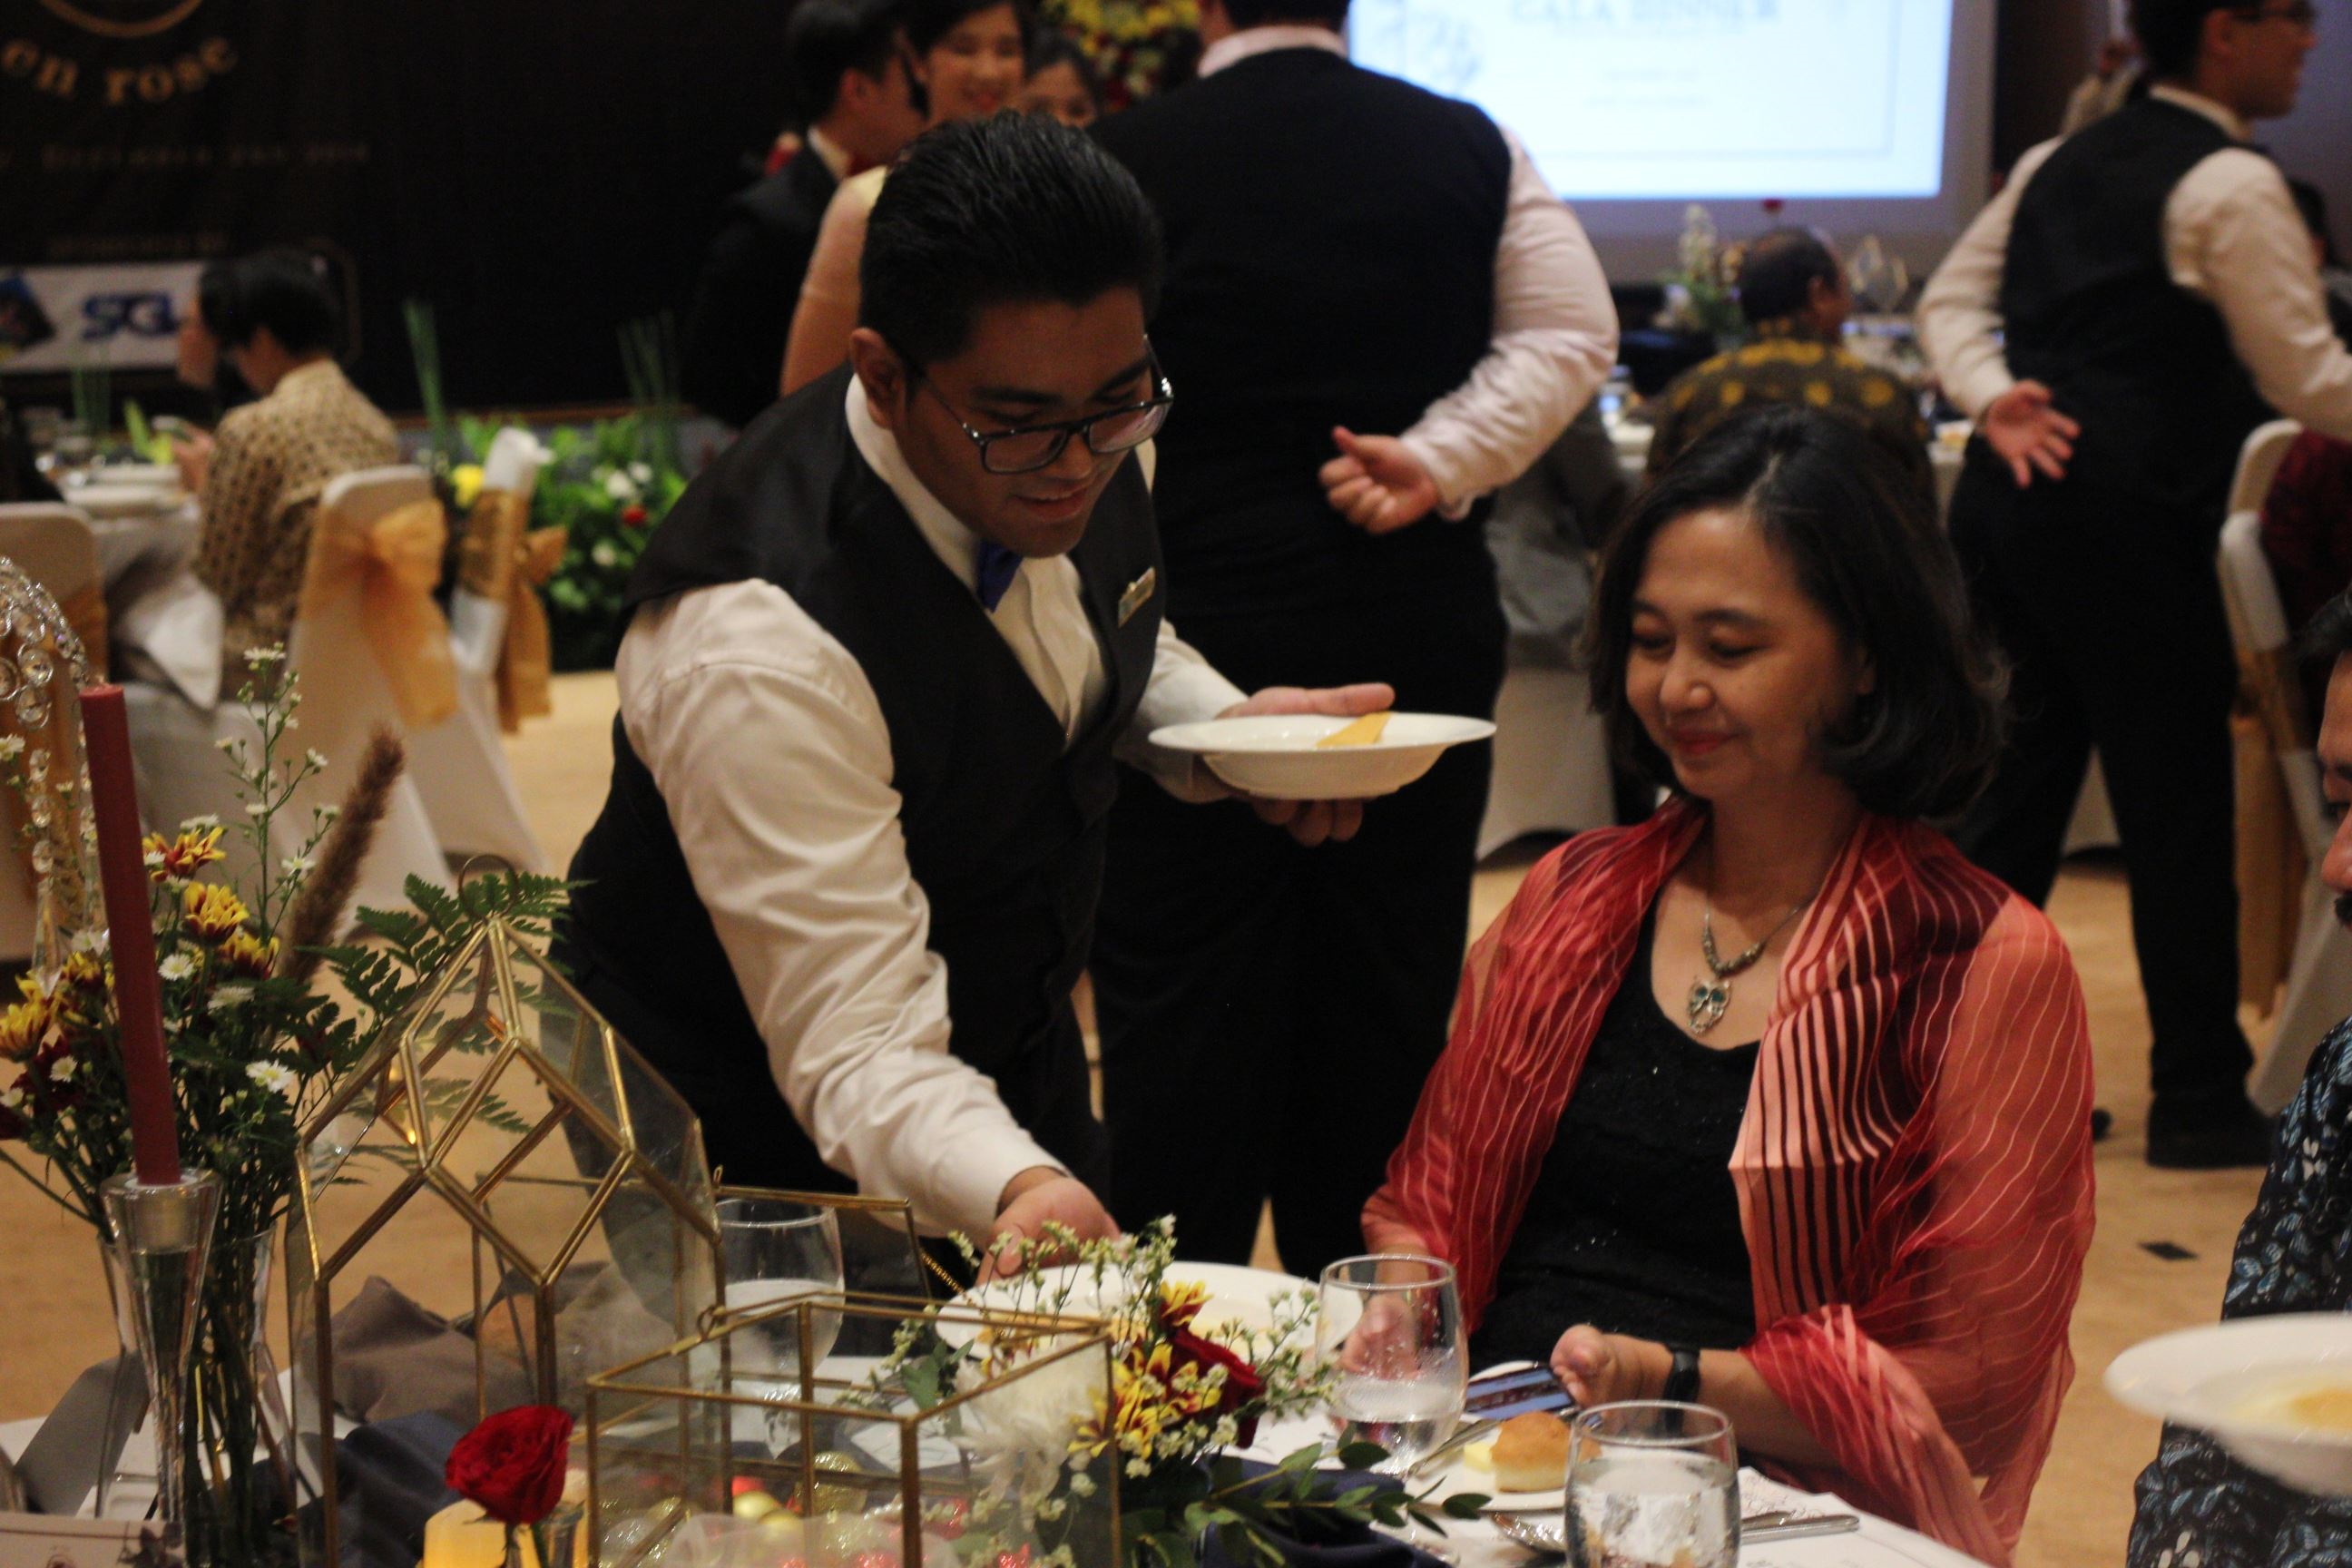 Hotel & Tourism Management Department Held an Annual Gala Dinner Event entitled “La Vie En Rose”